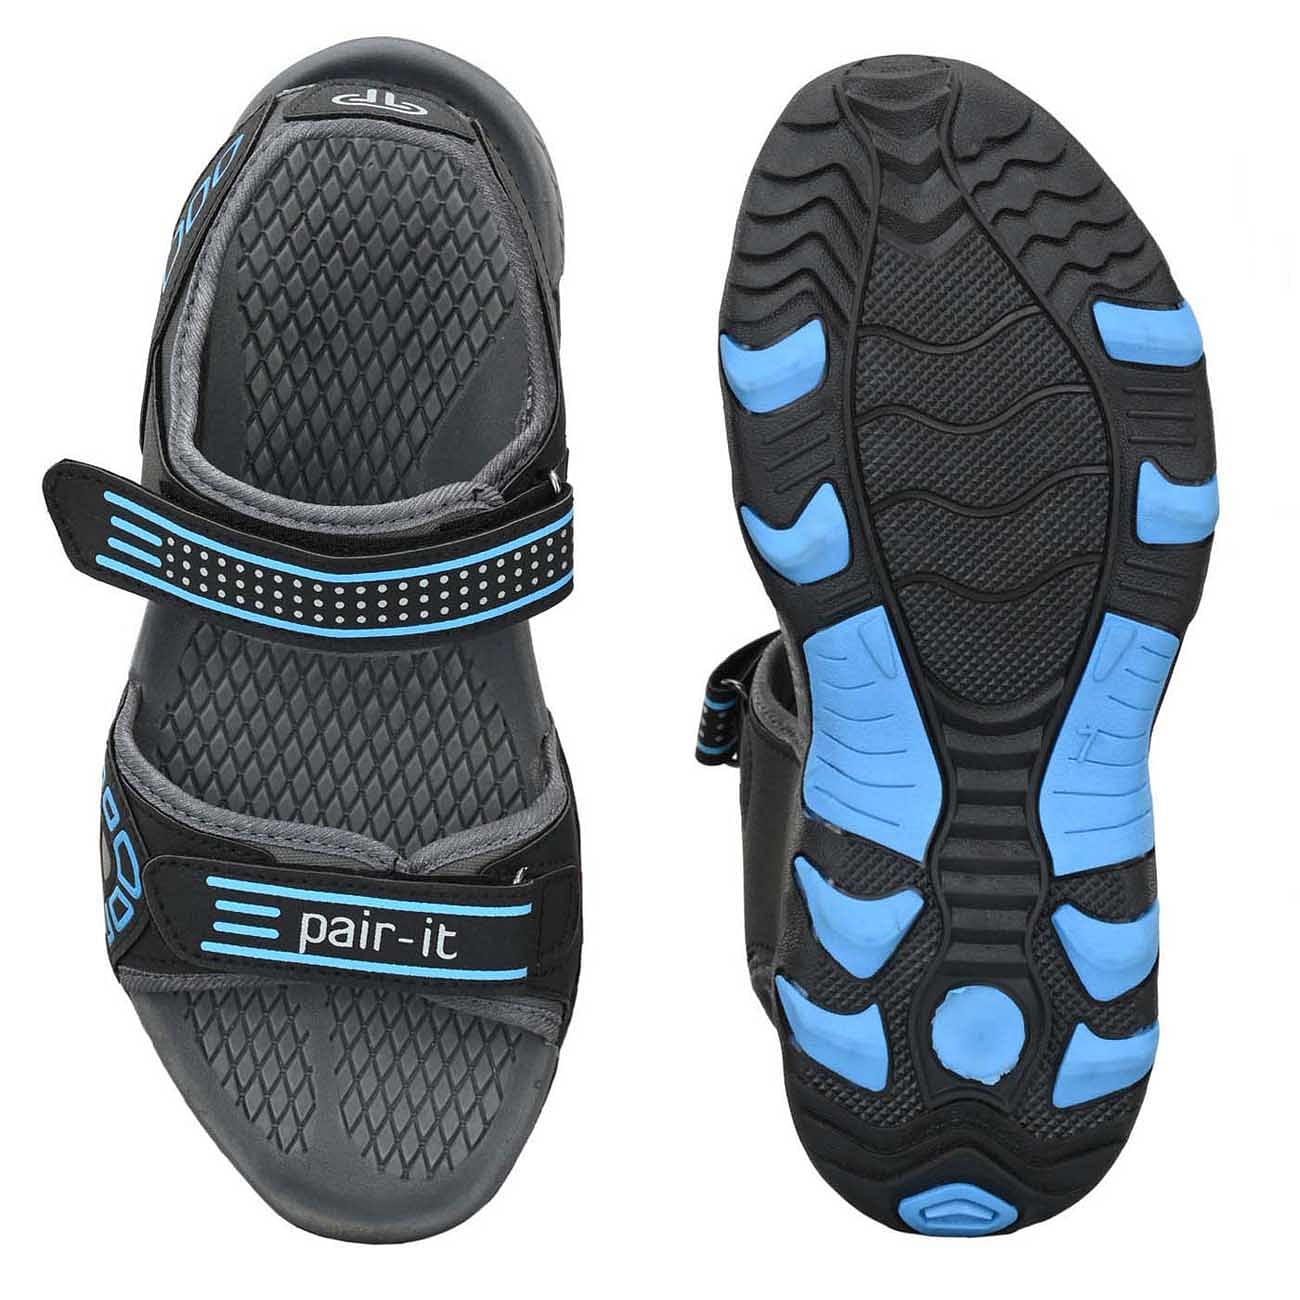 Pair-it Mn Sandals - Black/Sea Gree-UN-Mn-Sp-Sandal004